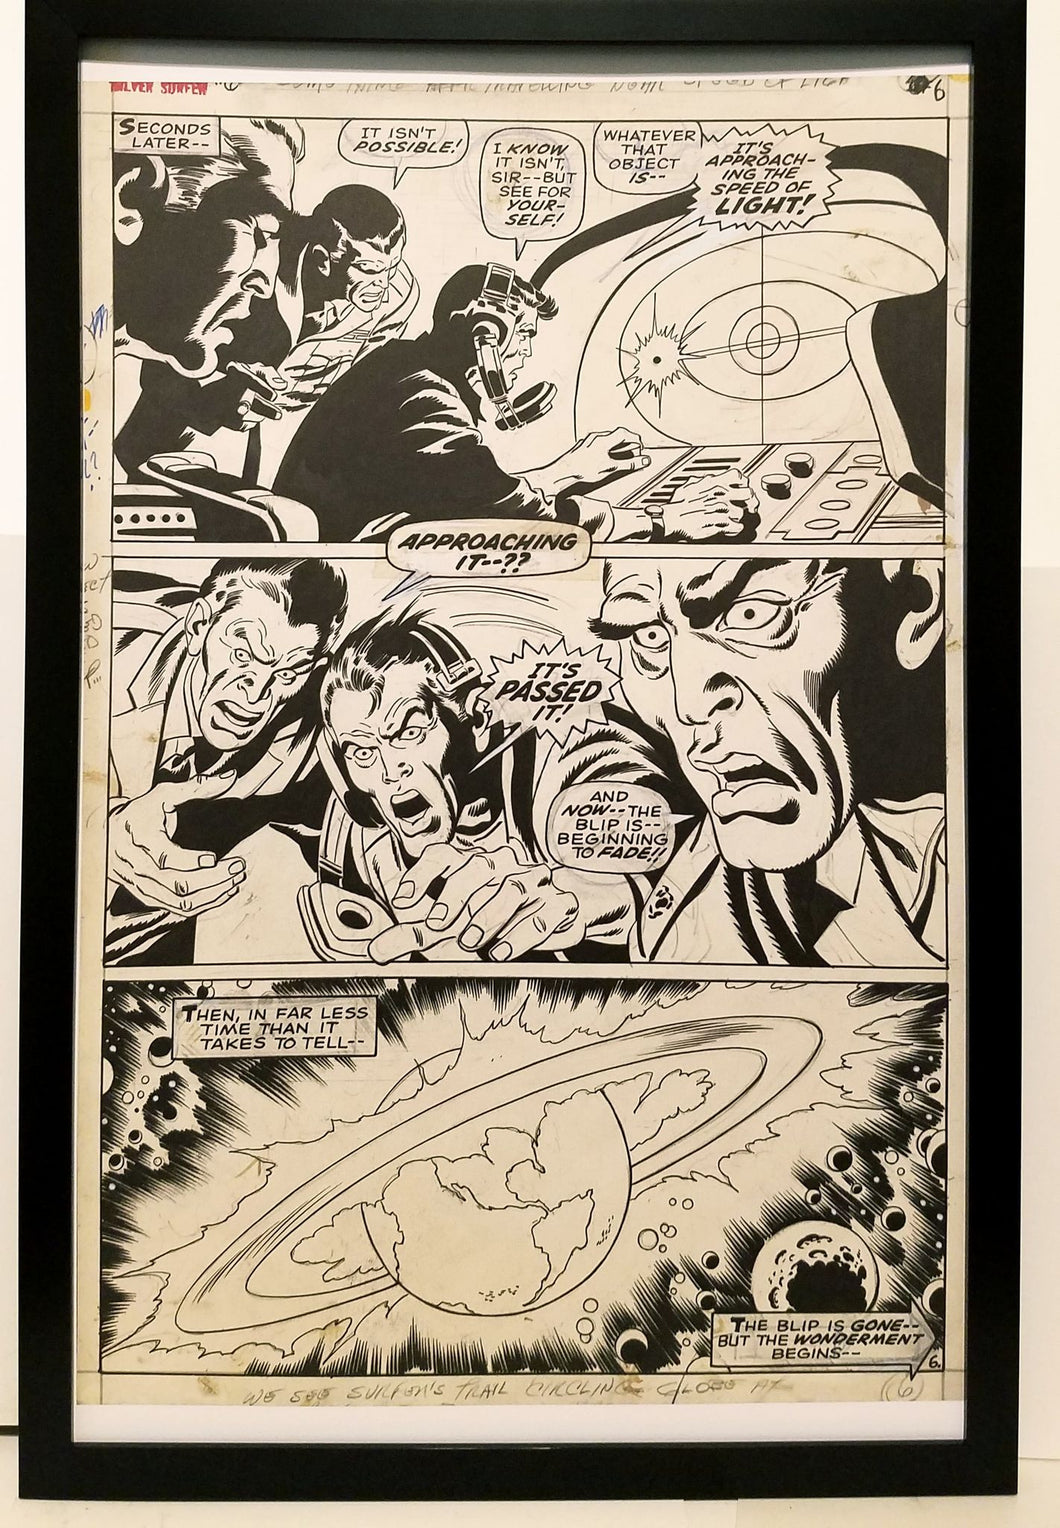 Silver Surfer #6 pg. 6 by John & Sal Buscema 11x17 FRAMED Original Art Poster Marvel Comics